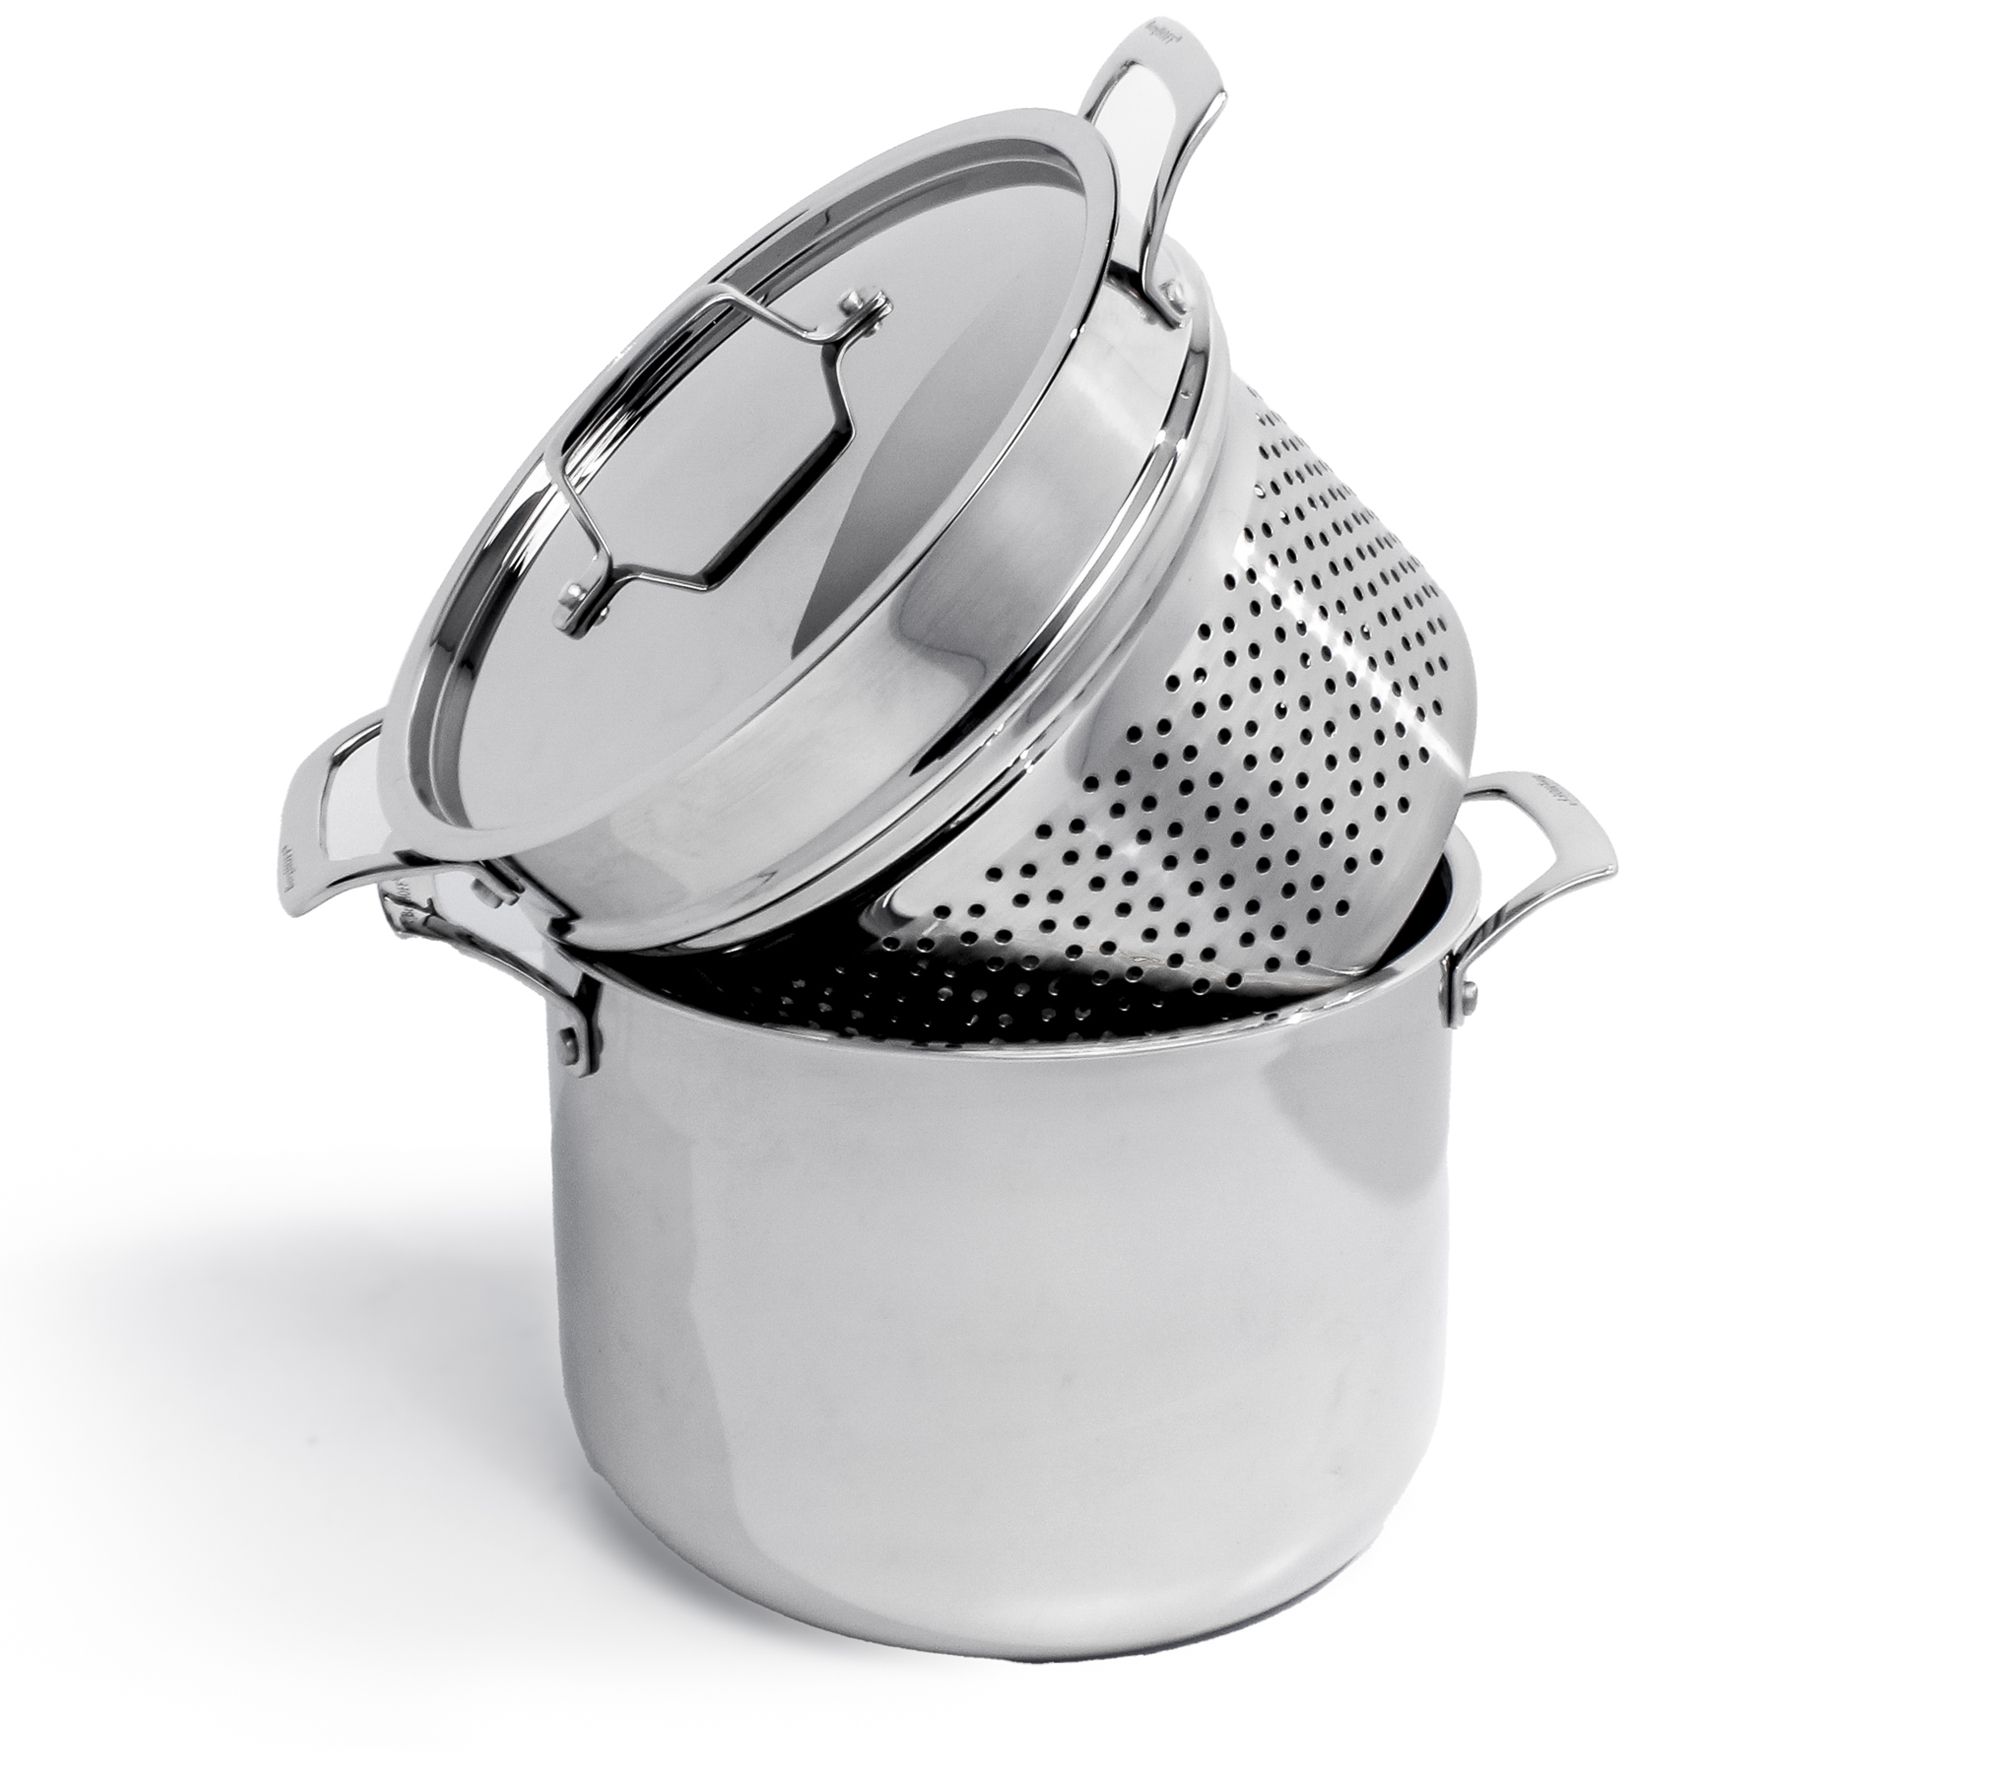 Berghoff Essentials Gourmet 12pc 18/10 Stainless Steel Cookware